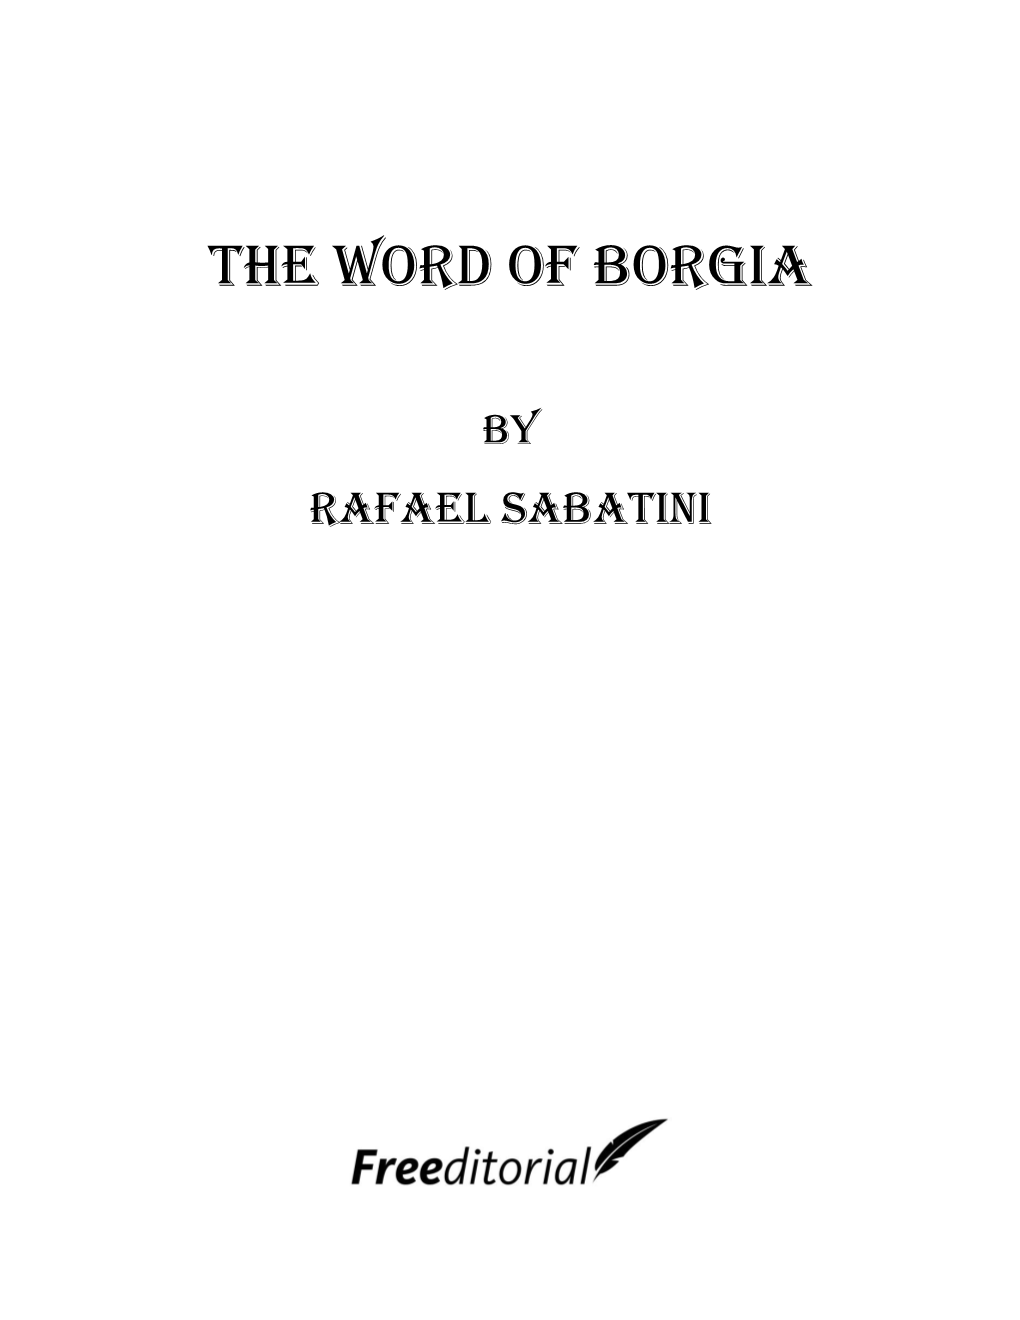 The Word of Borgia